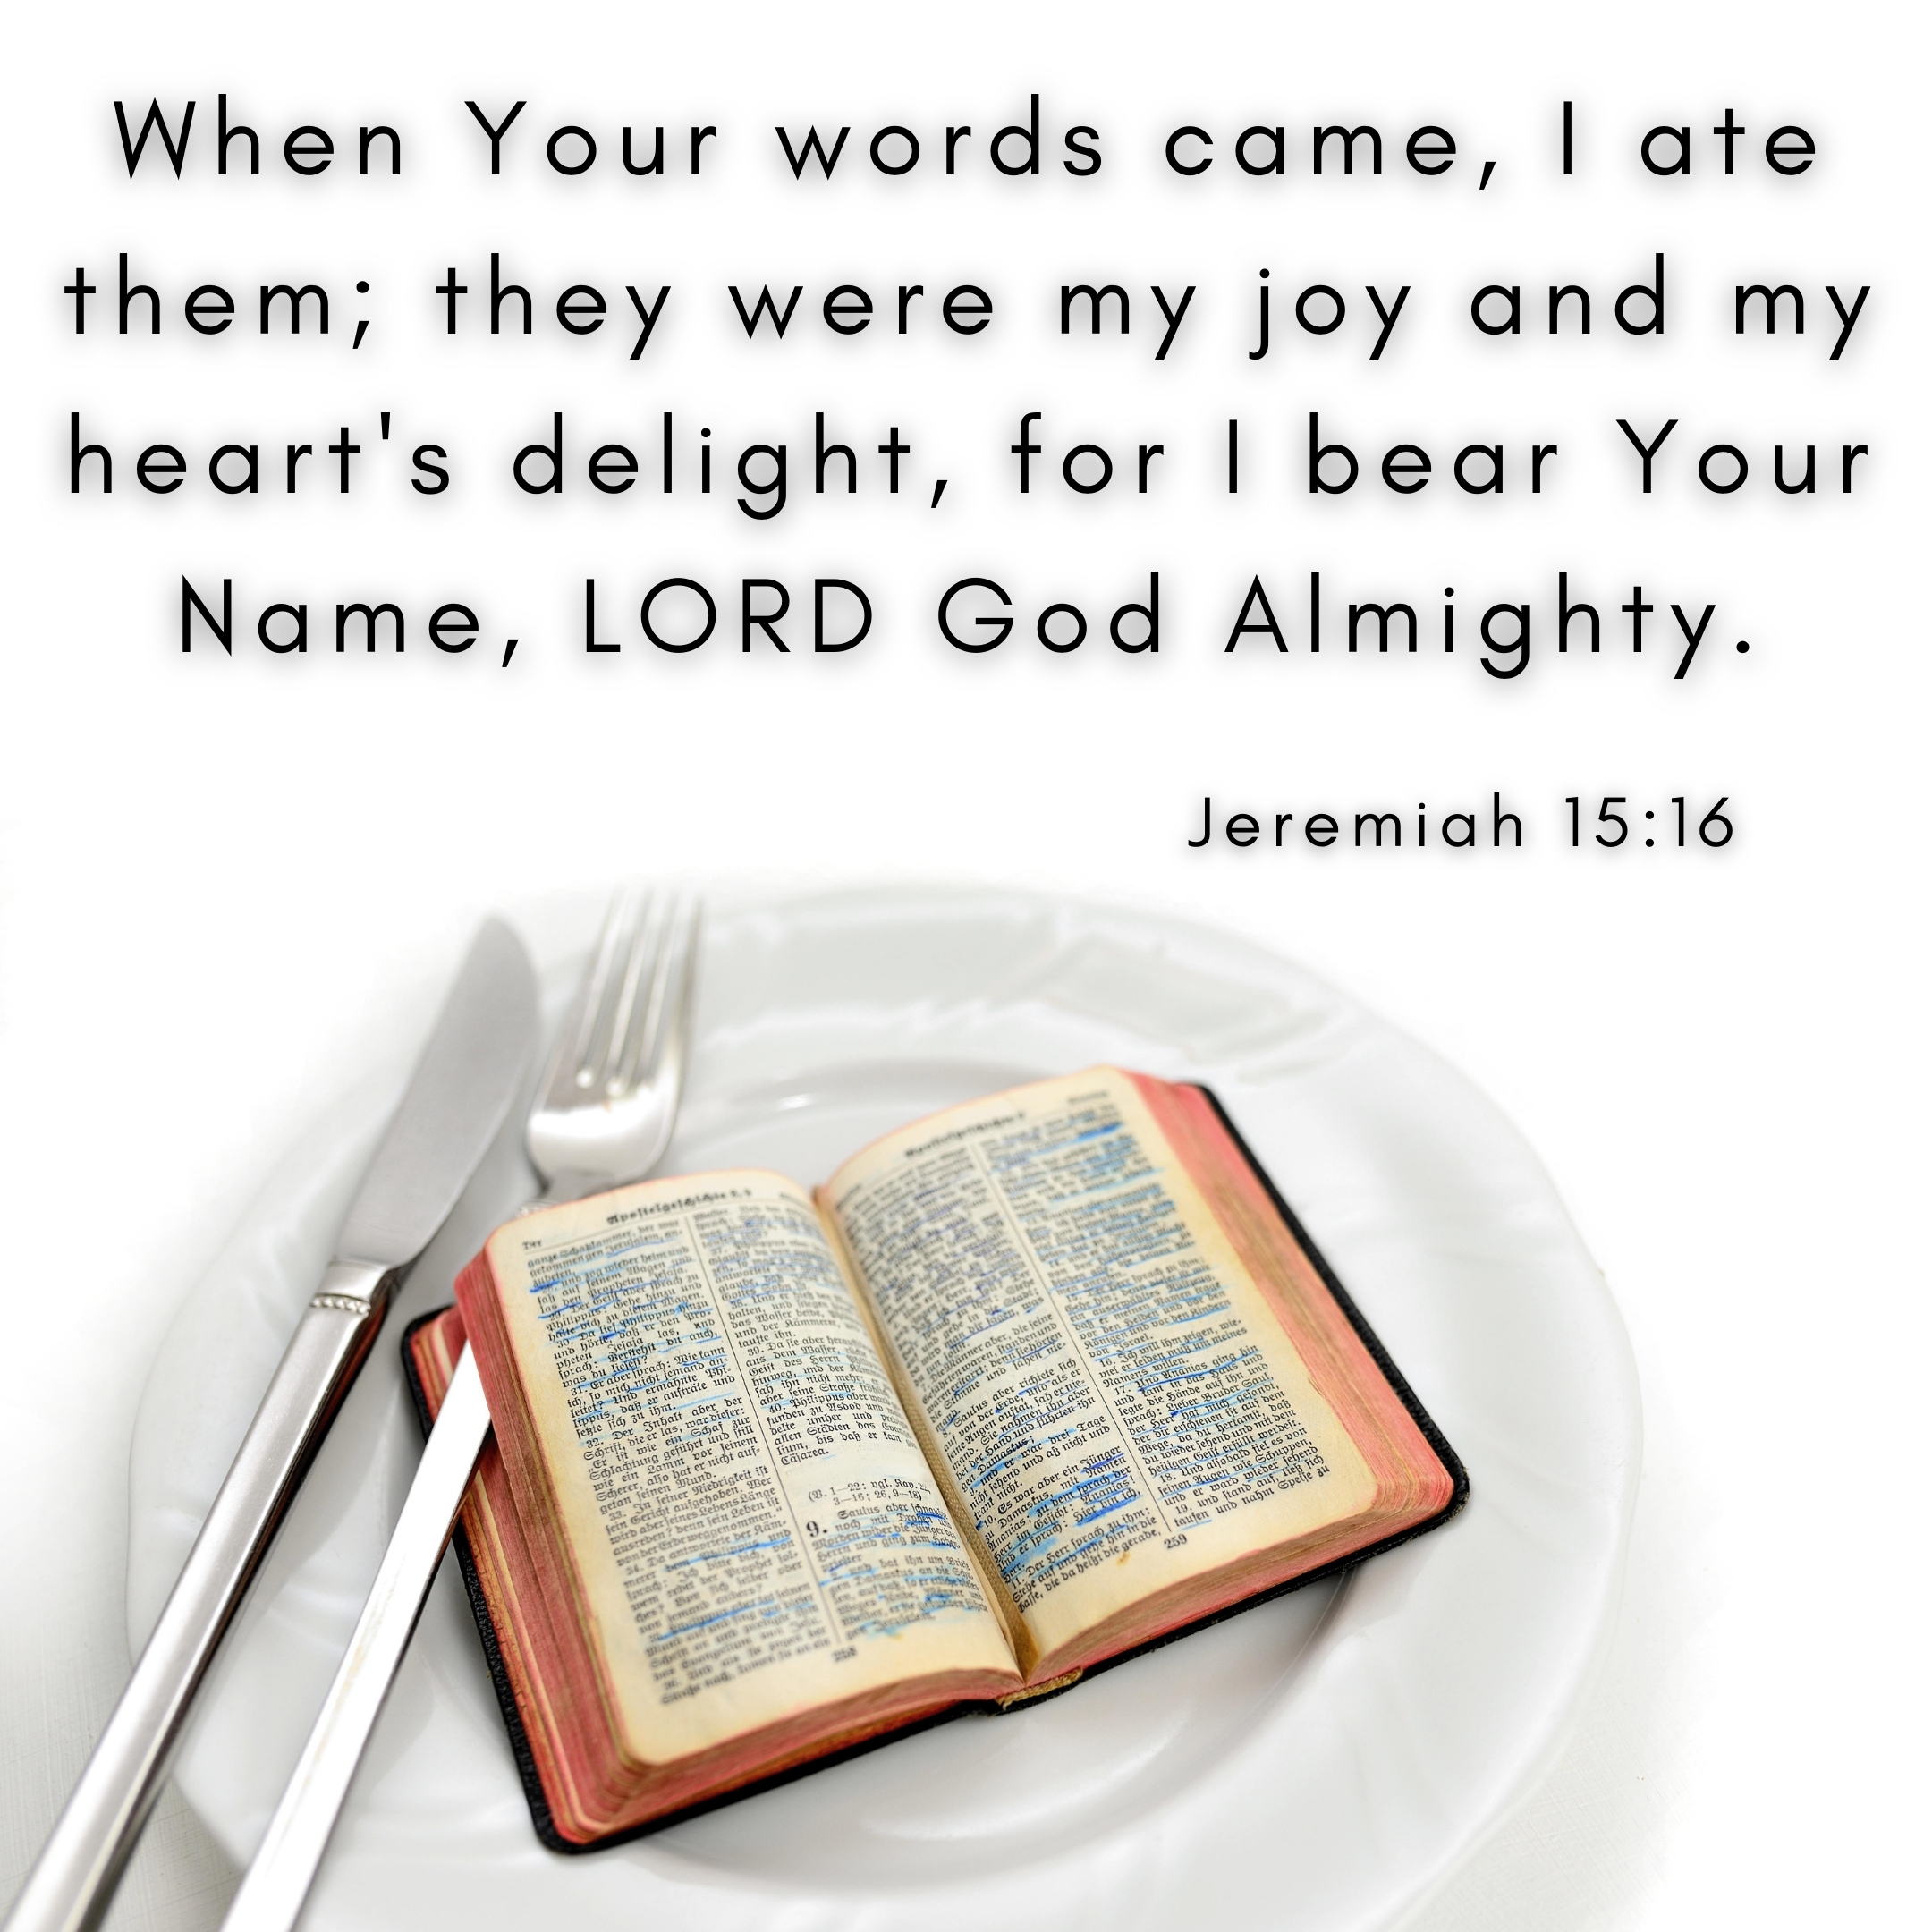 The Joy of God’s Word: A Reflection on Jeremiah 15:16